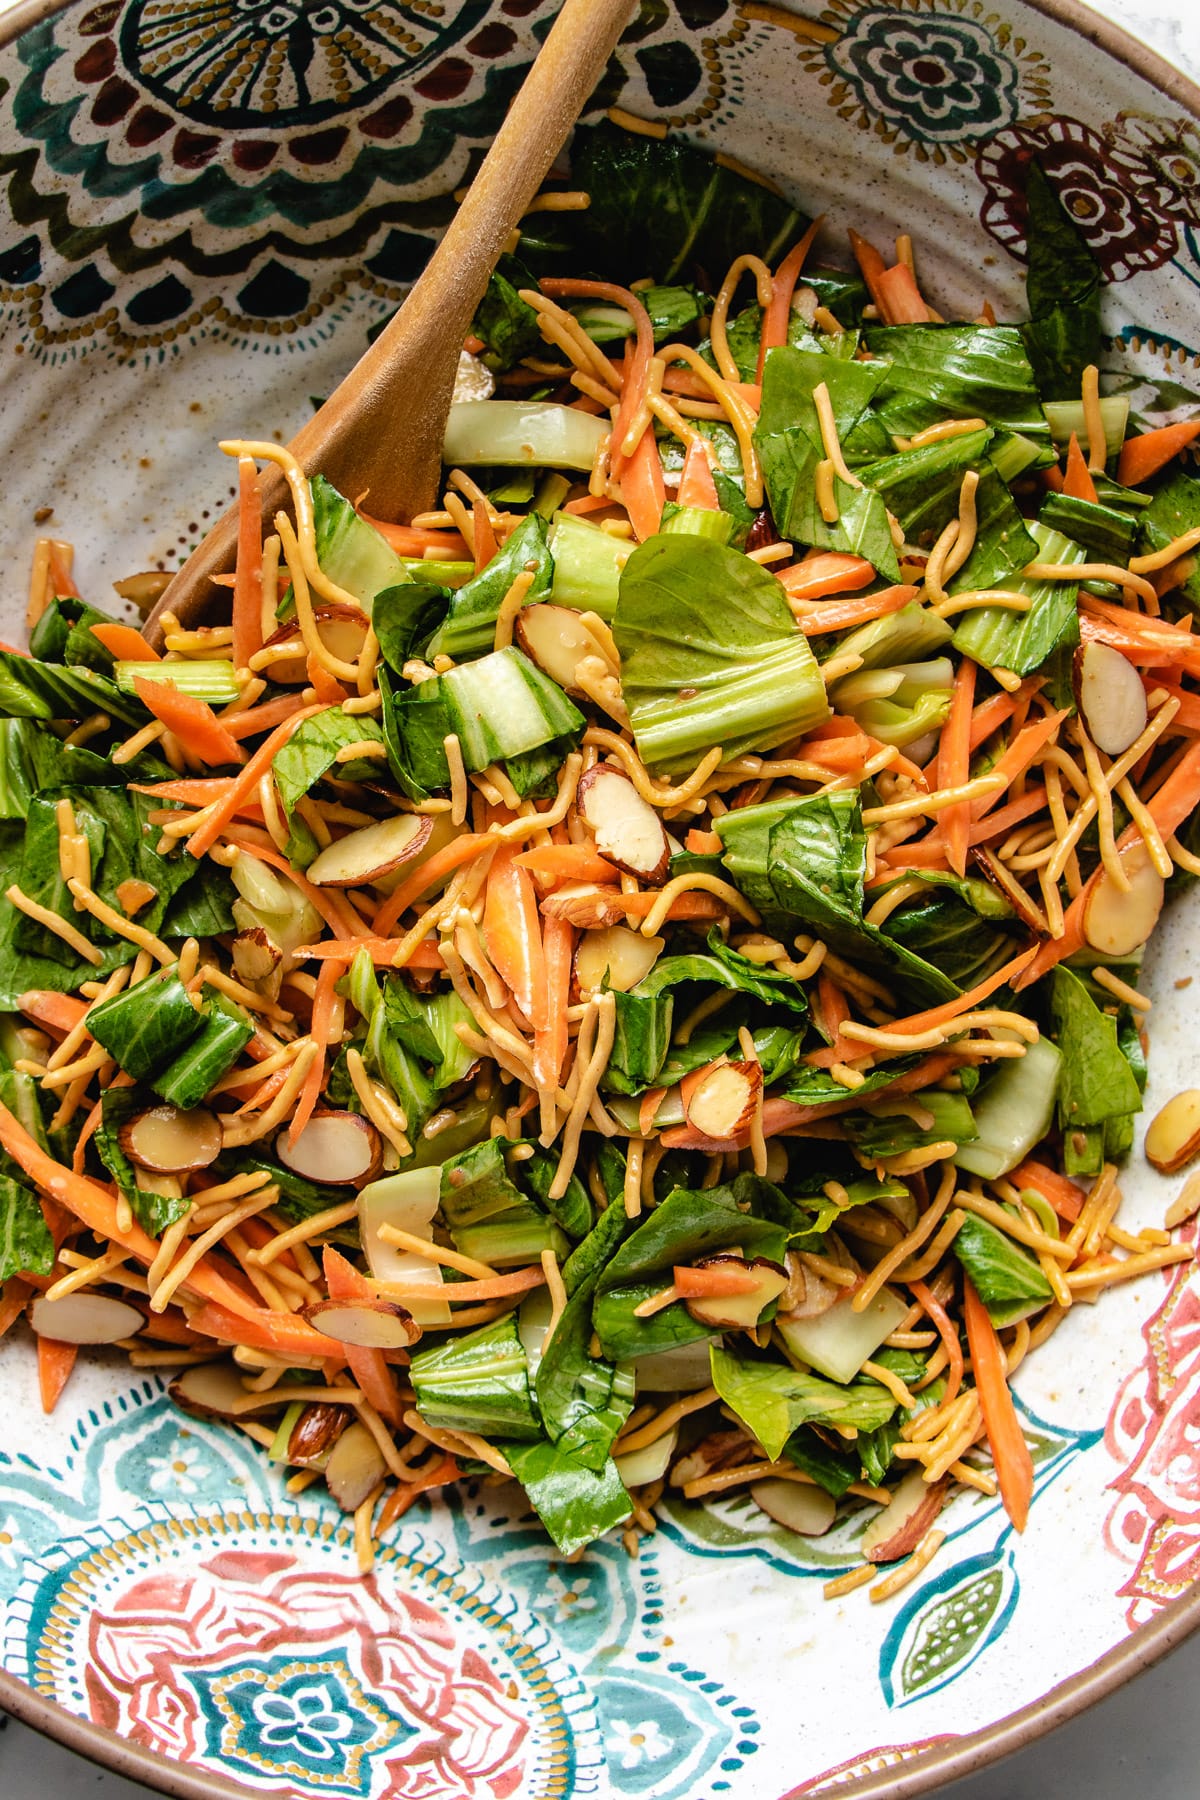 https://iheartumami.com/wp-content/uploads/2020/12/Chopped-Salad-Asian-with-Crispy-Noodles-I-Heart-Umami-3.jpg